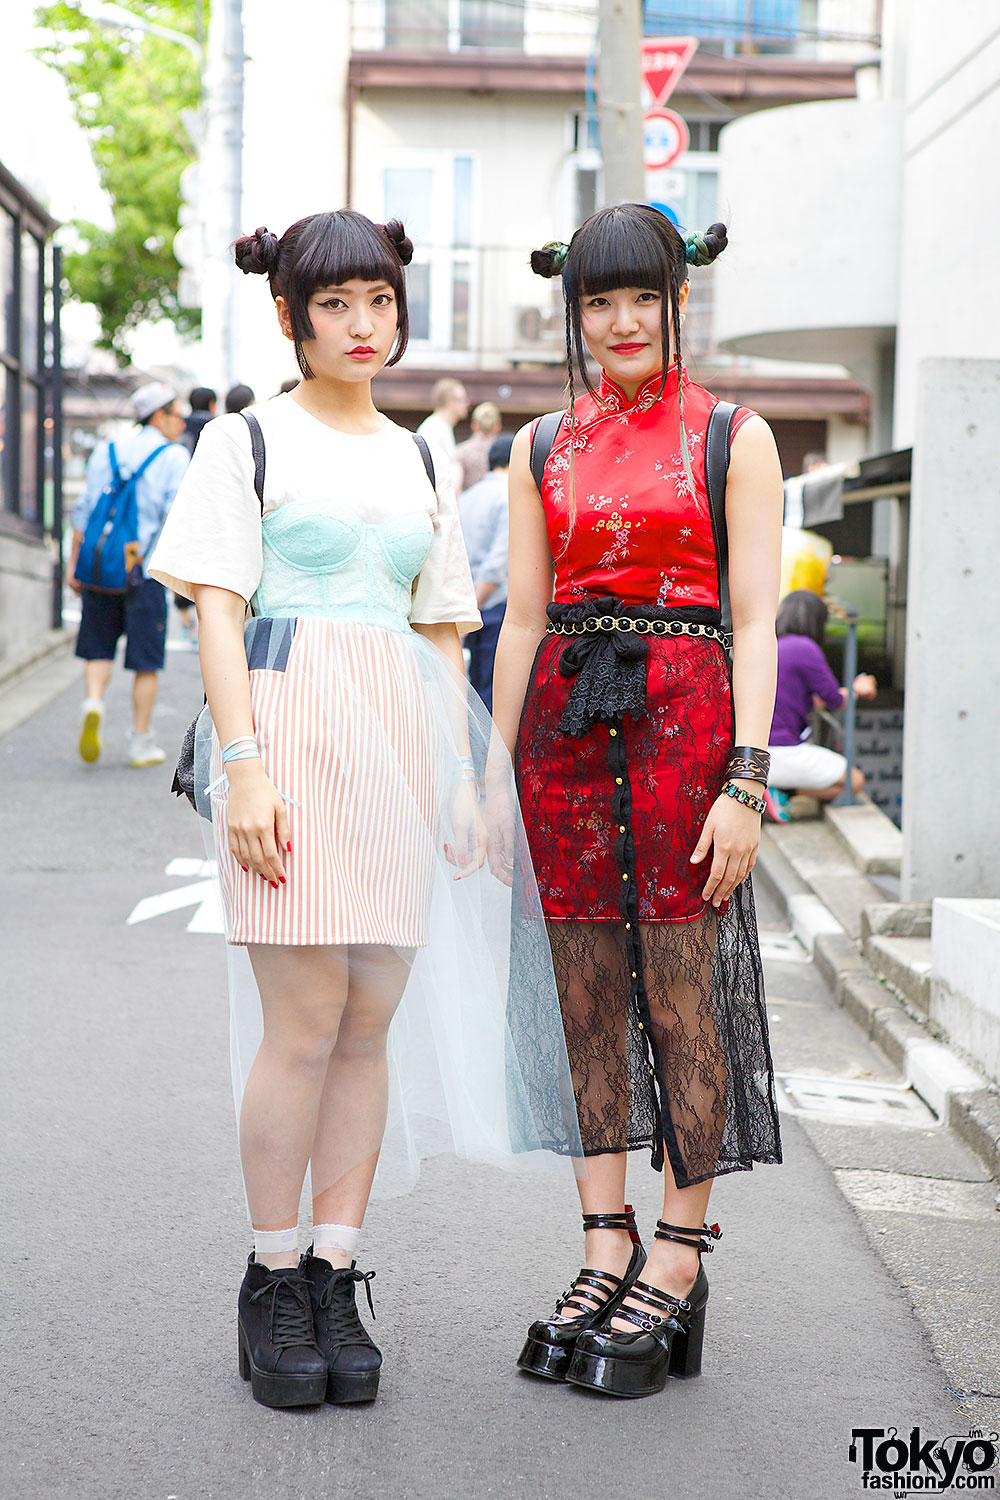 Harajuku Girls w/ Twin Buns, Sheer Skirts, Cheongsam & Platforms ...